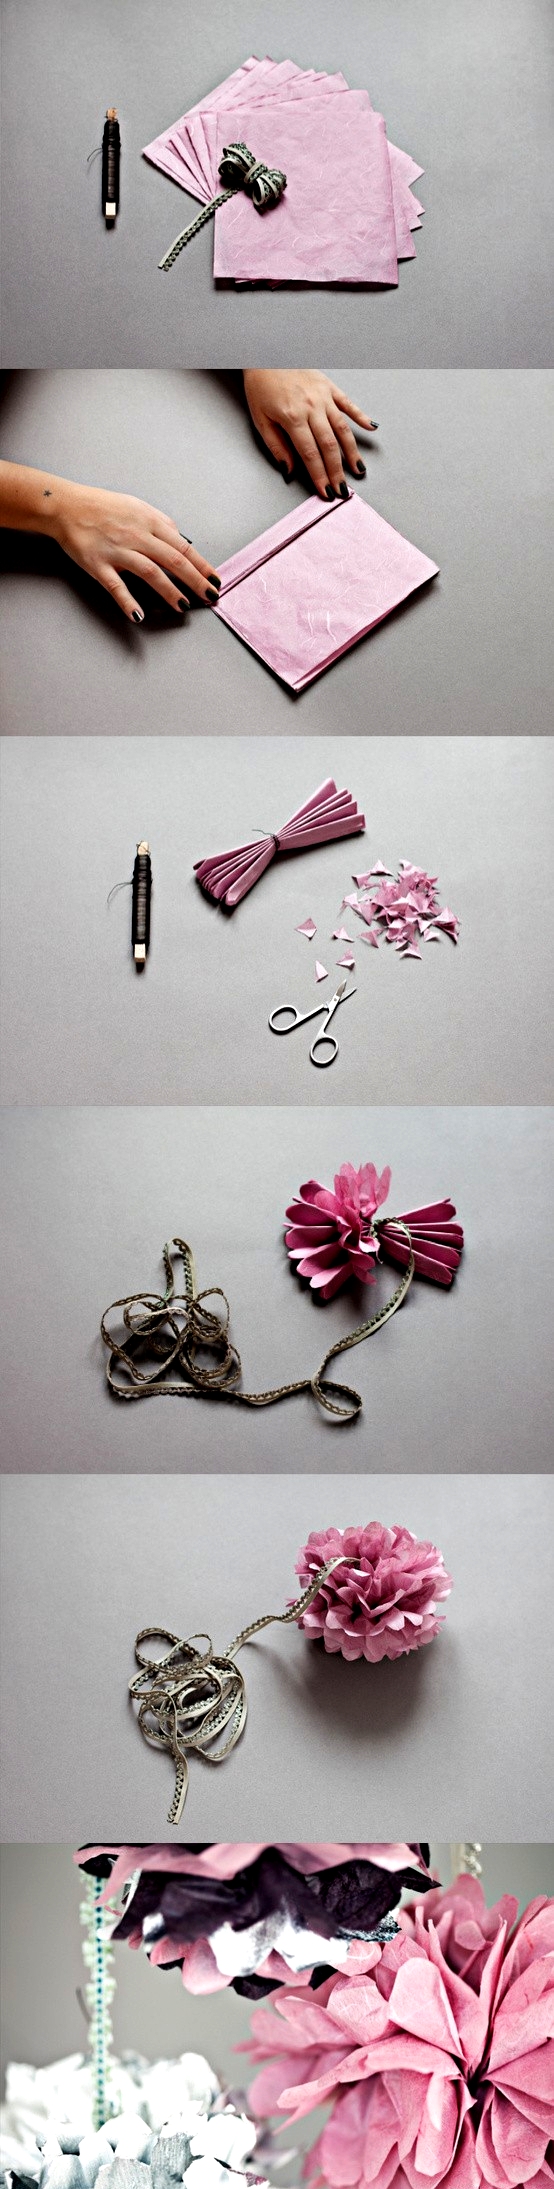 DIY Paper Flower